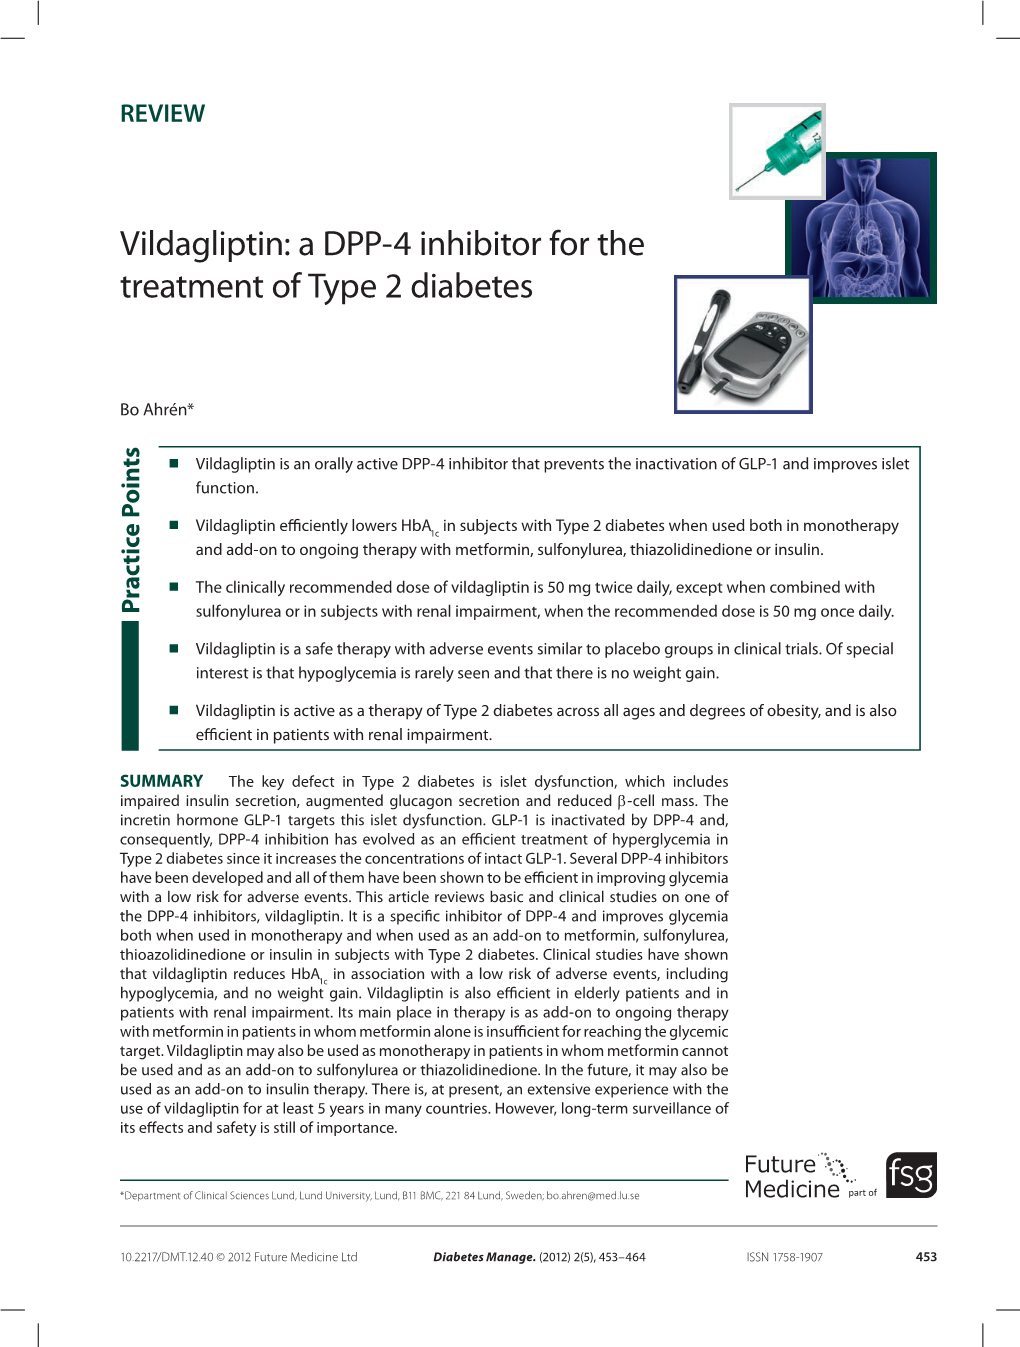 Vildagliptin: a DPP-4 Inhibitor for the Treatment of Type 2 Diabetes